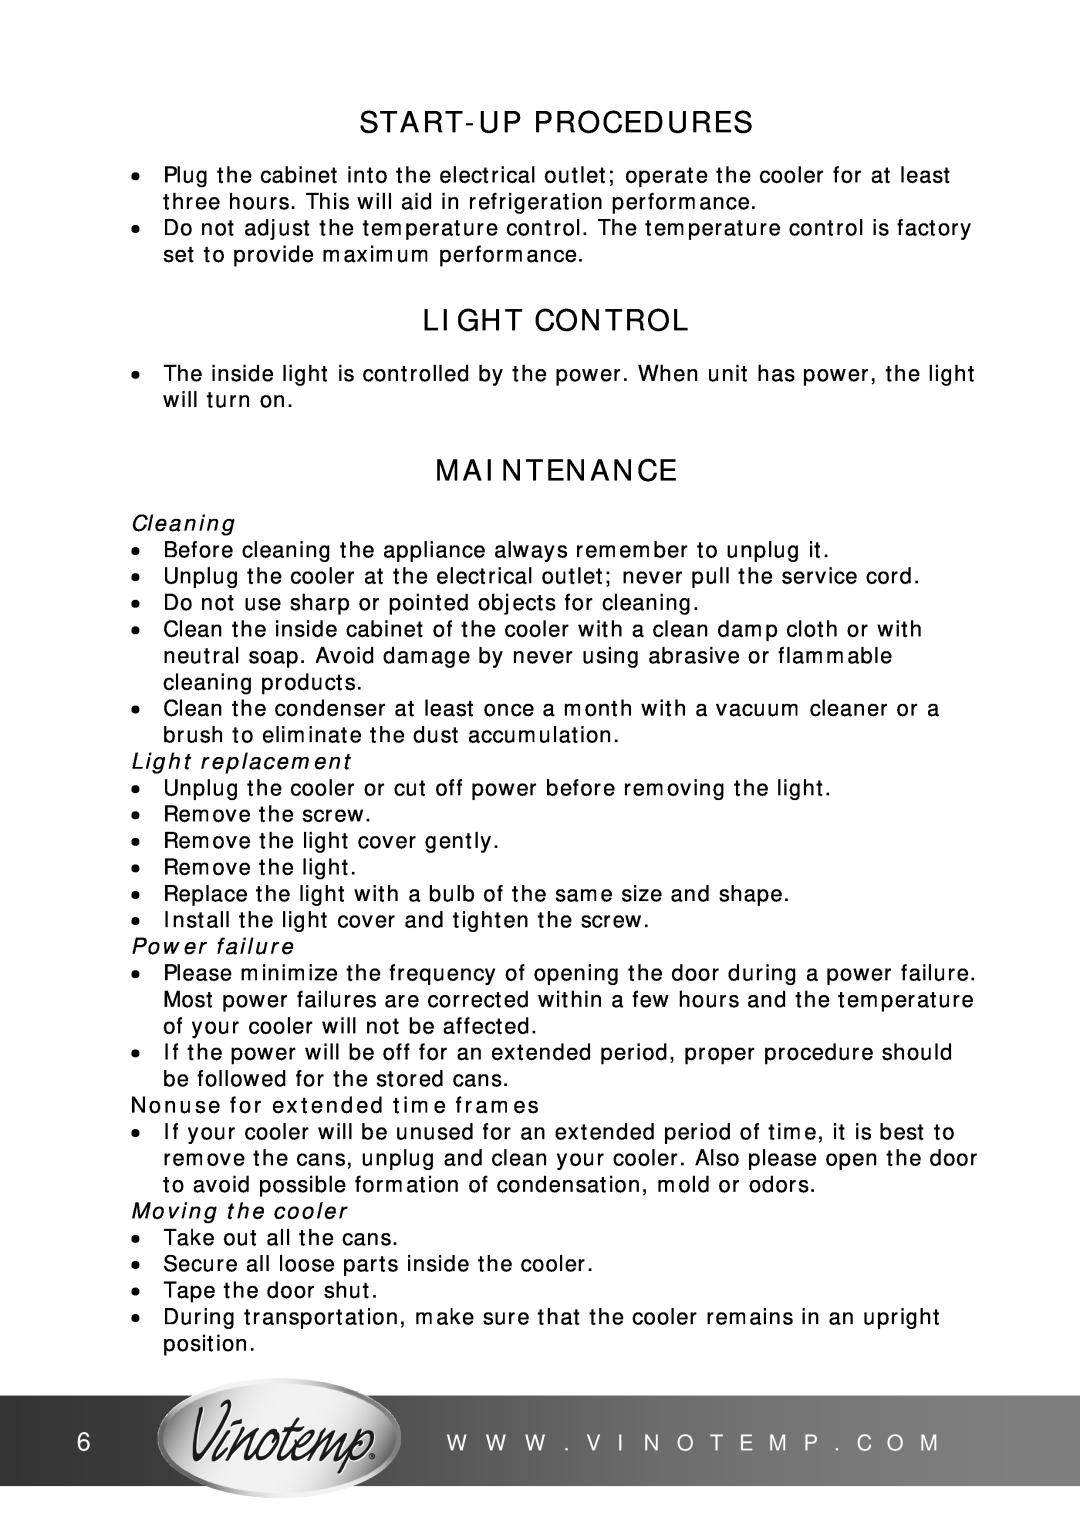 Vinotemp VT-BC-1 manual Start-Upprocedures, Light Control, Maintenance, Cleaning, Light replacement, Power failure 